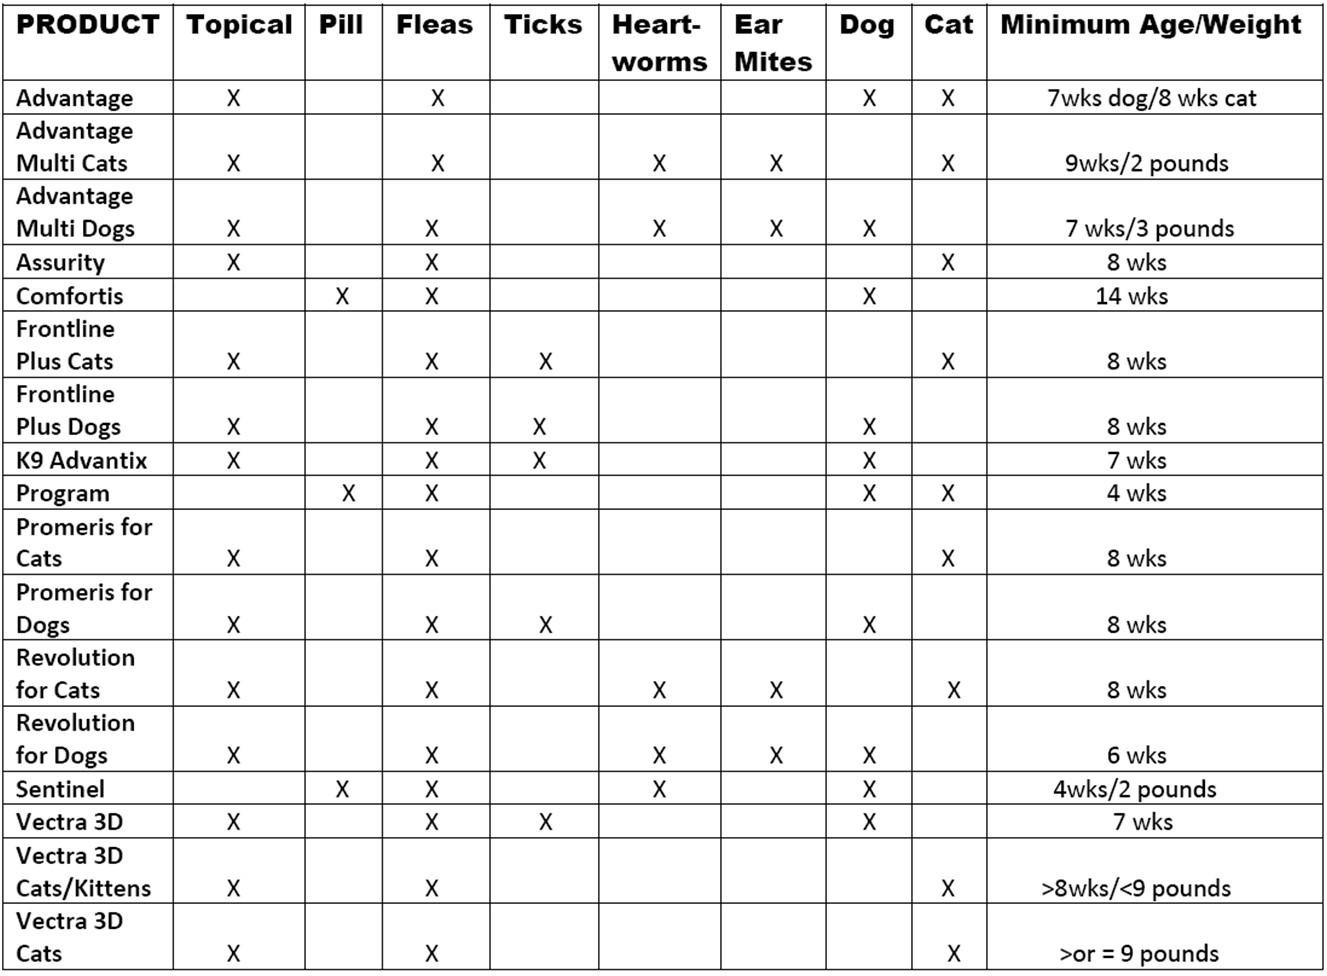 Dog Flea And Tick Comparison Chart